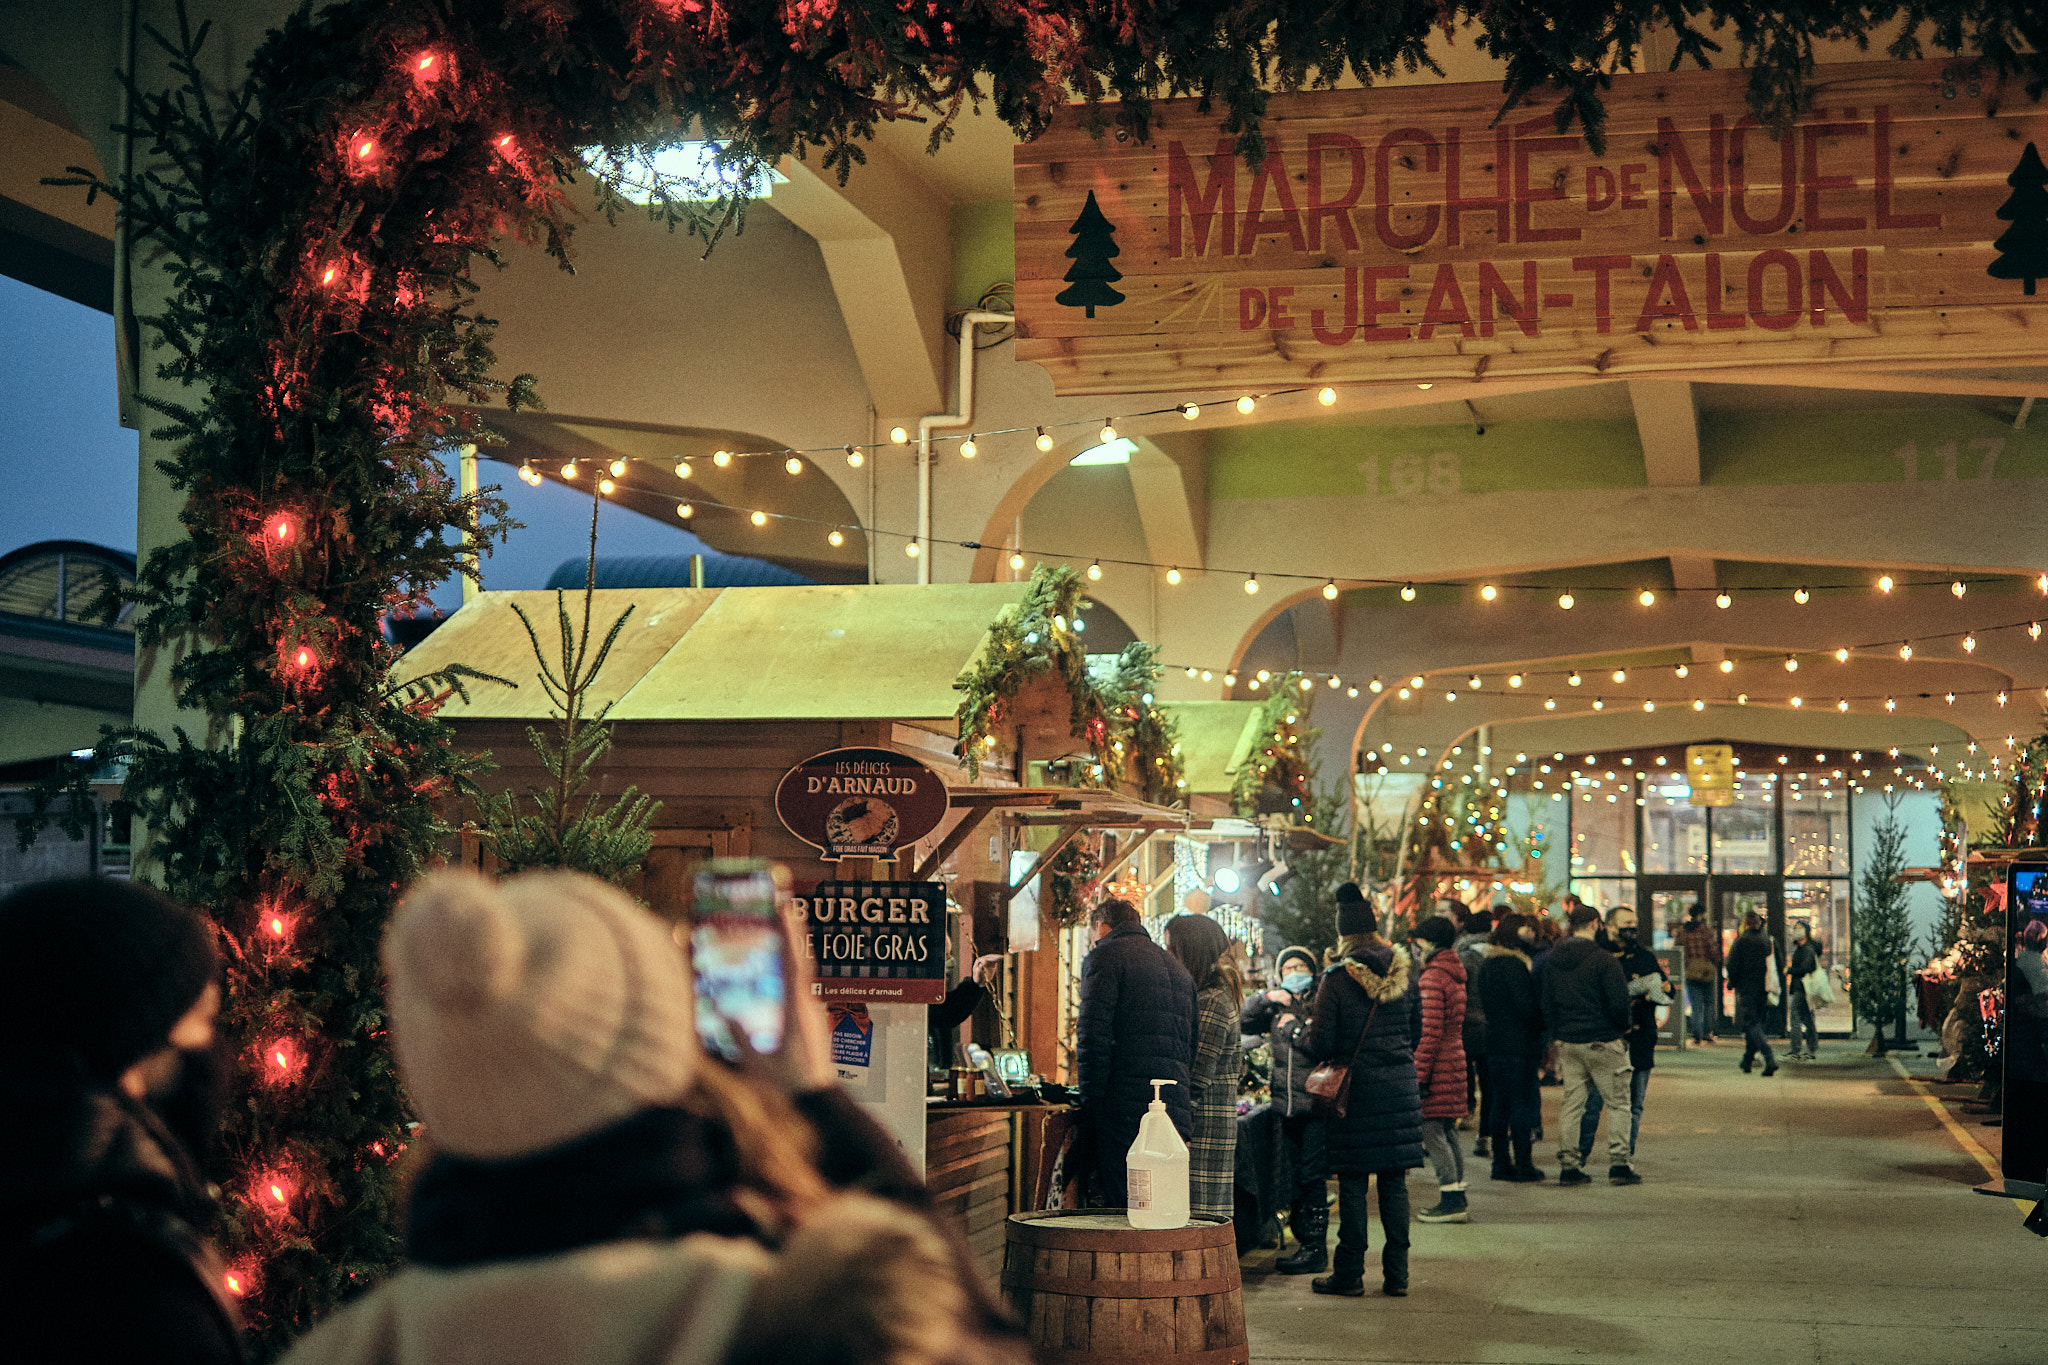 Holiday magic at the Jean-Talon Christmas market!